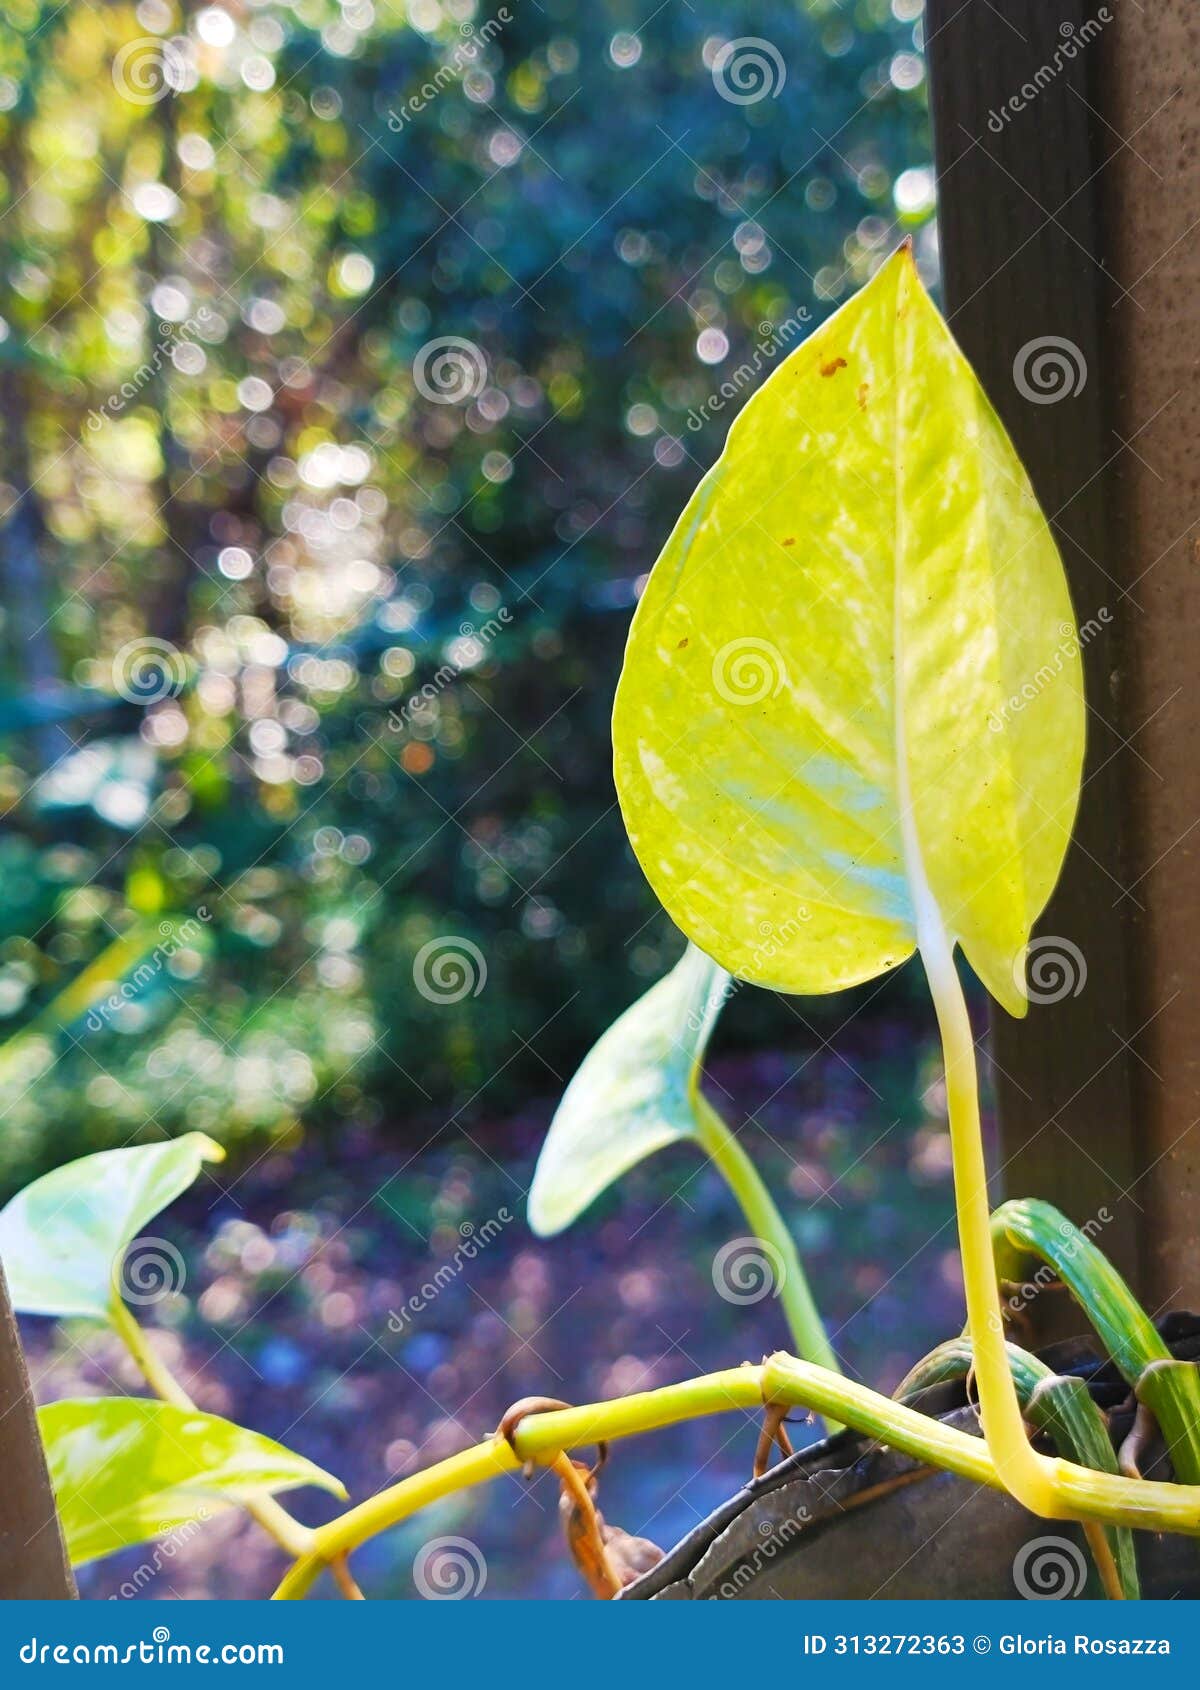 philodendron plant heart leaf araceae family popular houseplants